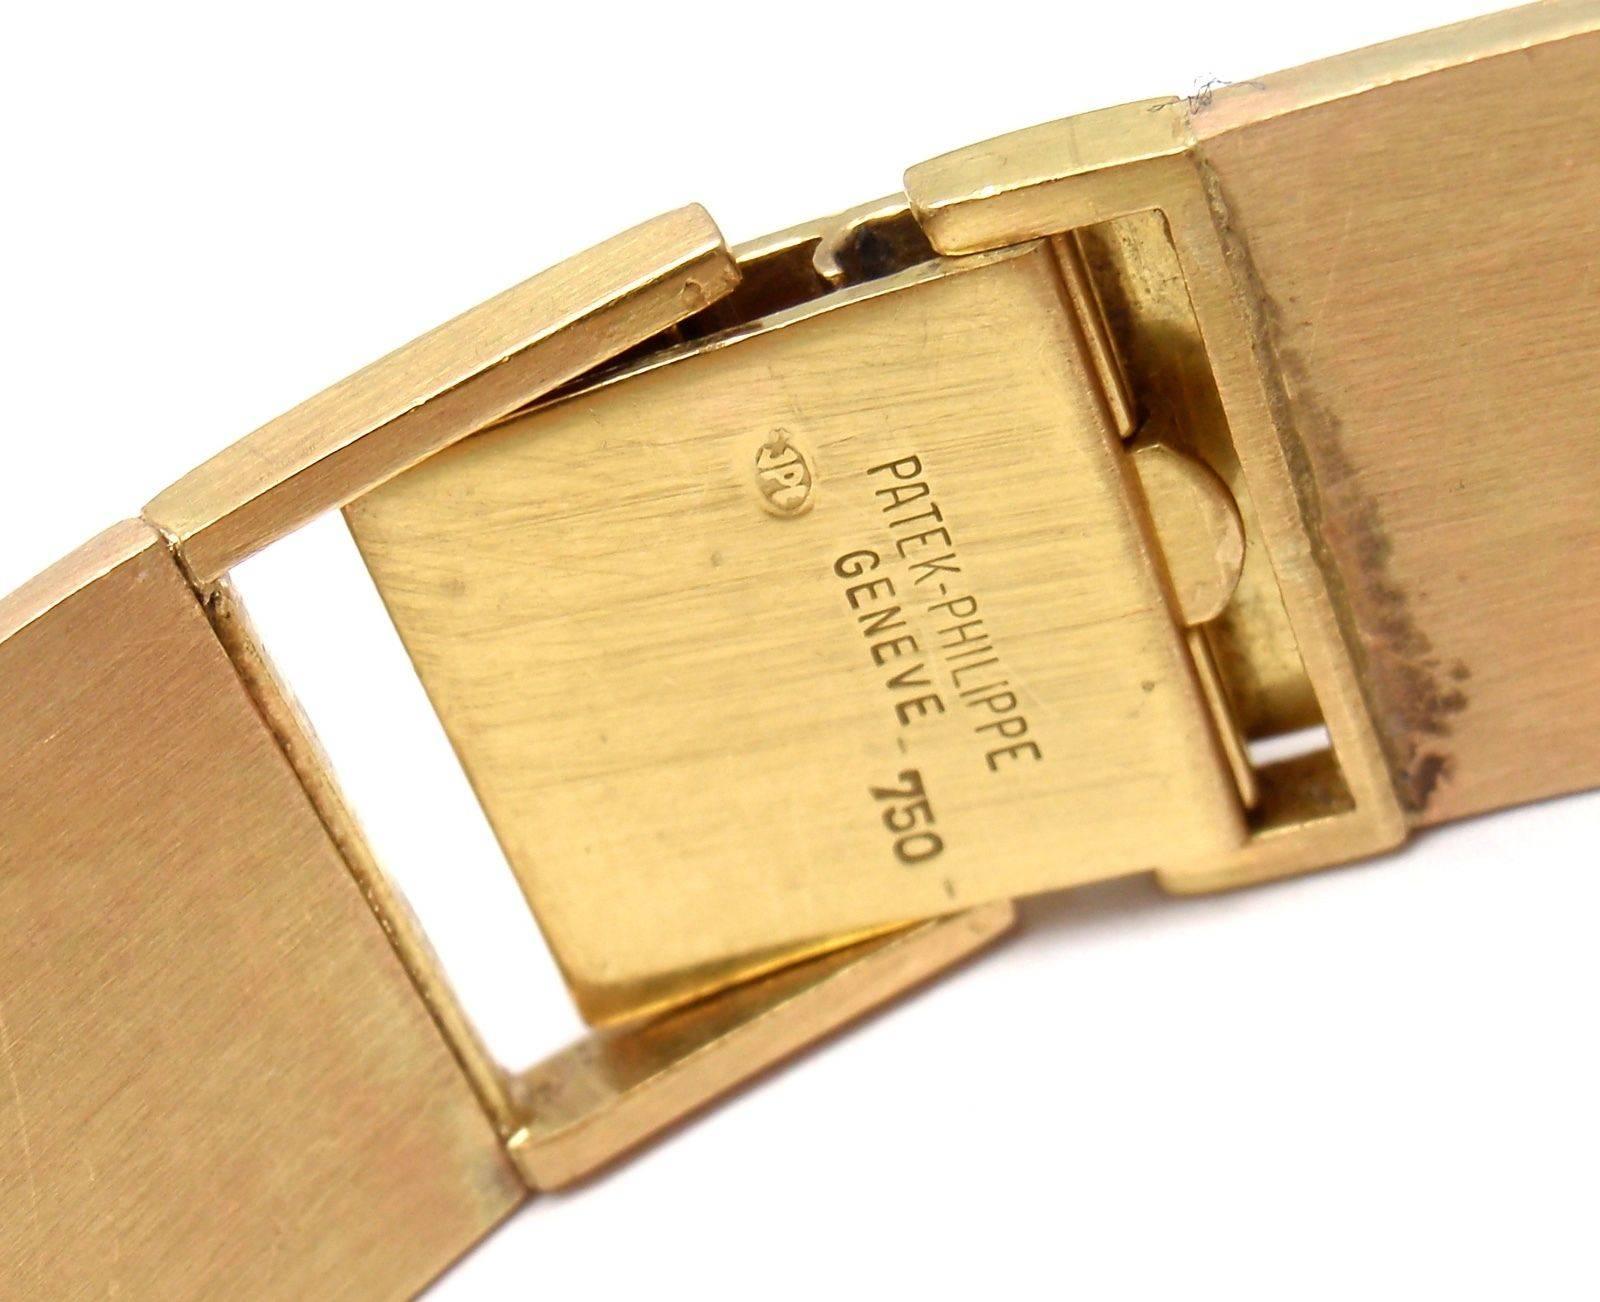 Patek Philippe Yellow Gold Manual Wind Wristwatch with Integral Bracelet Watch 4